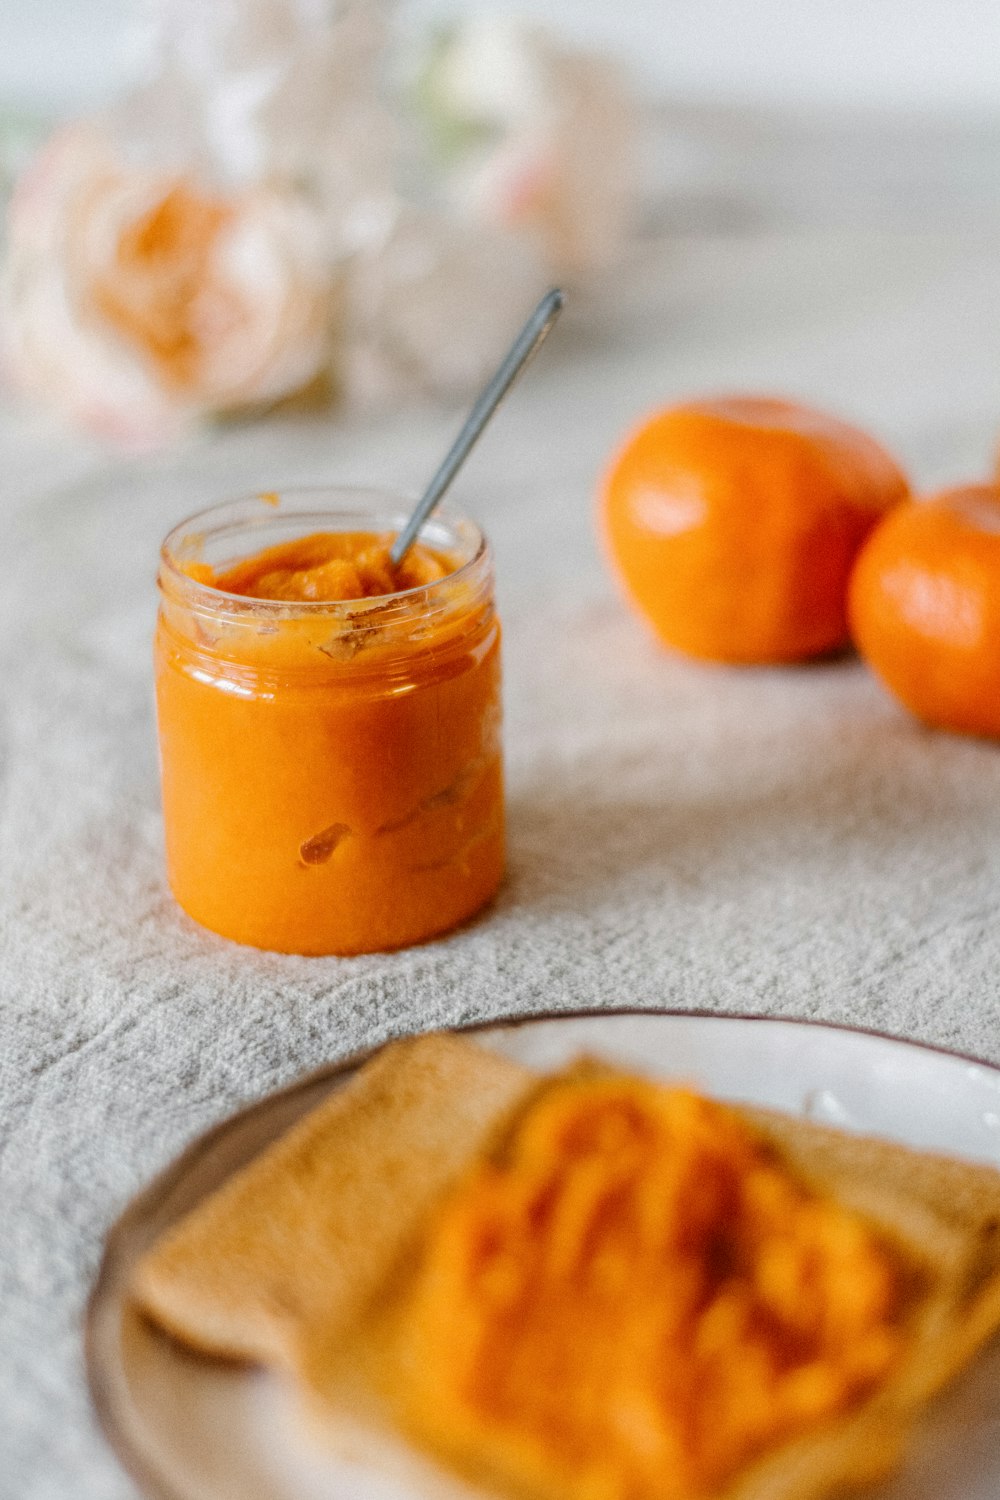 a small jar of orange marmalade next to some oranges